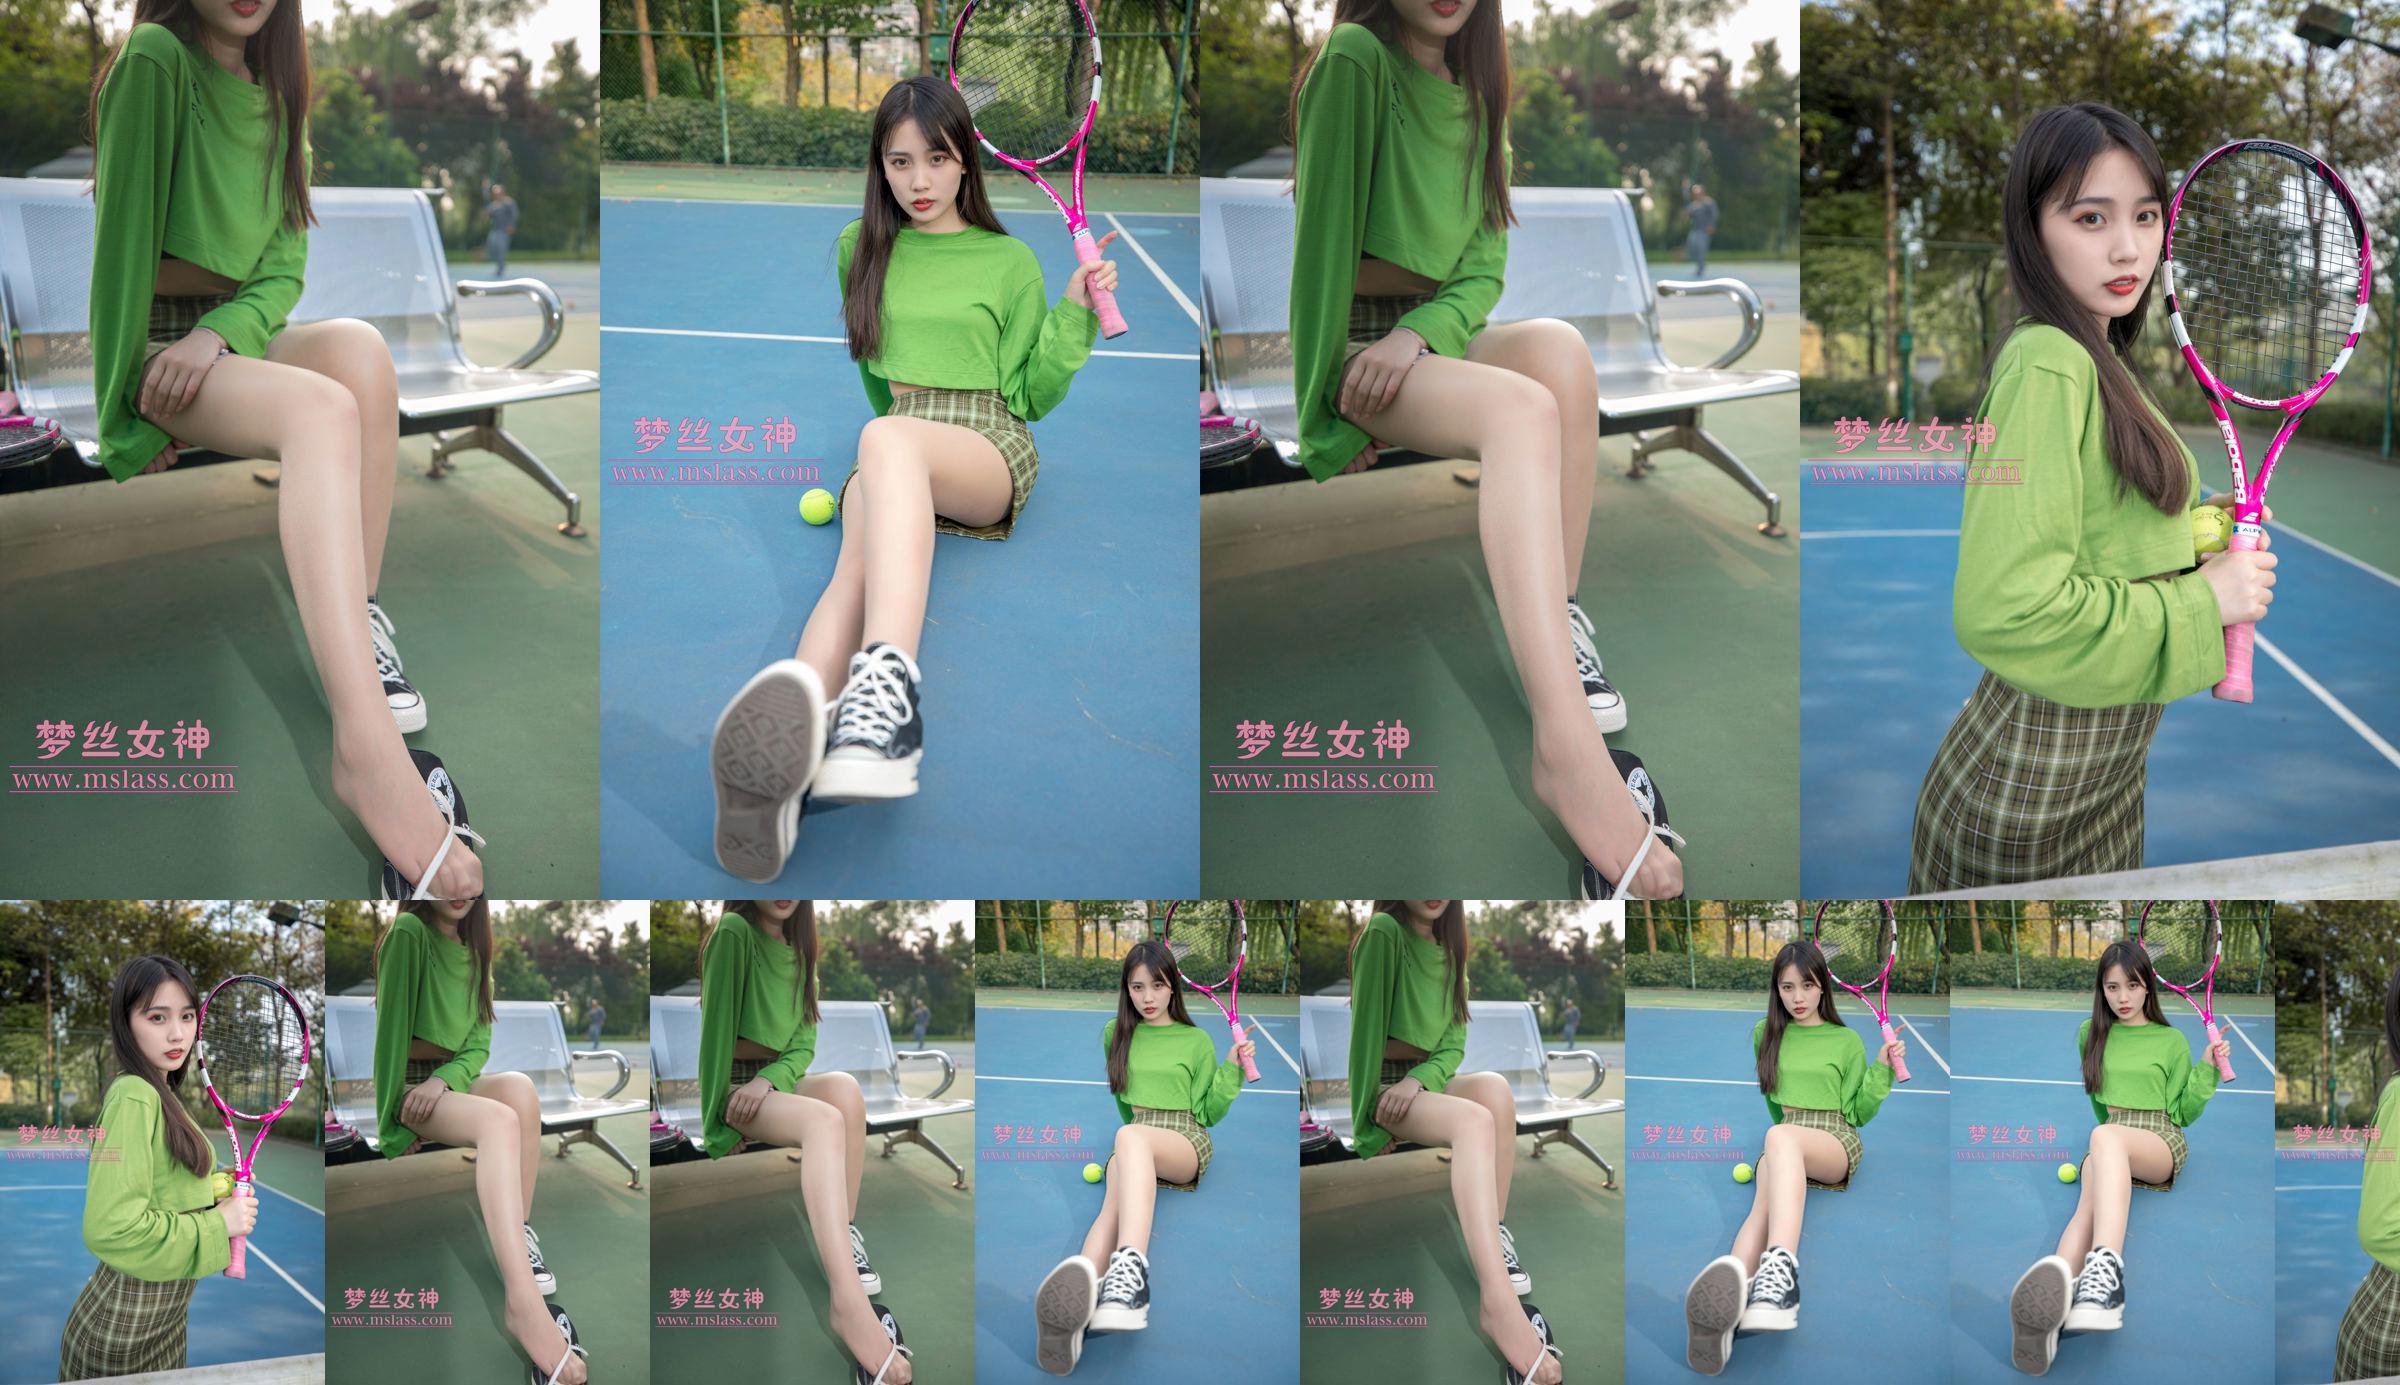 [Diosa de los sueños MSLASS] Chica del tenis Xiang Xuan No.af7d86 Página 2